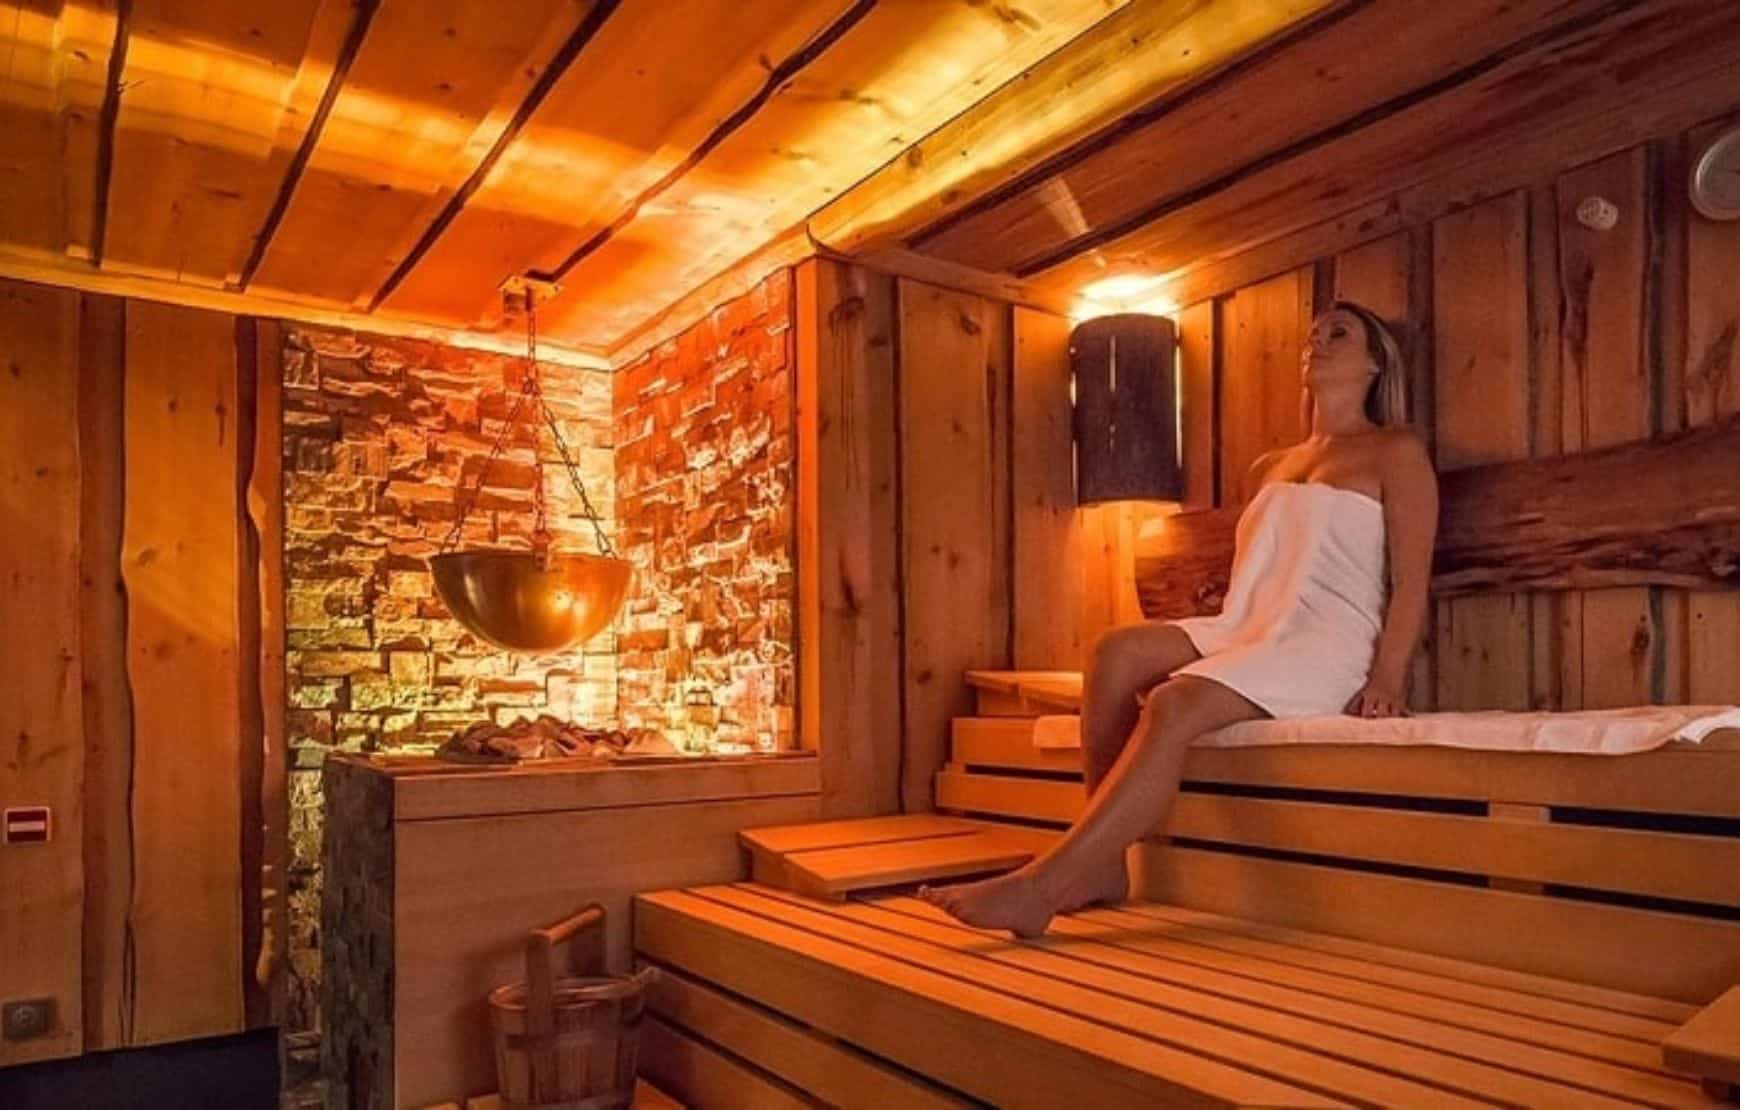 Turkish Bath in Cappadocia - take sauna before hammam